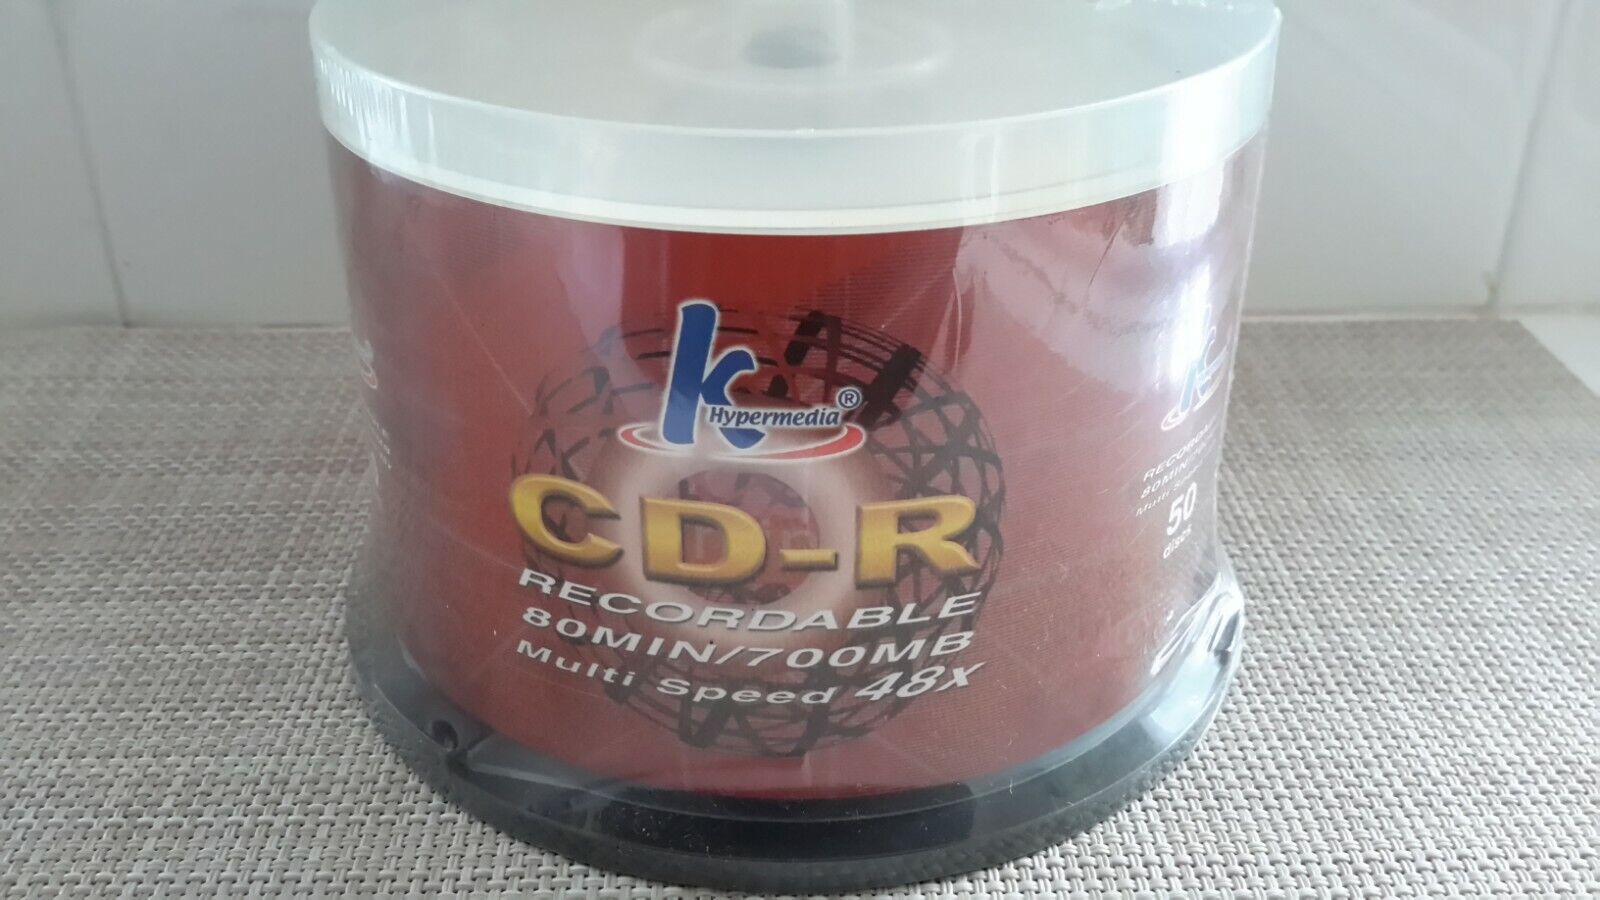 K Hypermedia CD-R Recordable Discs 700MB 80min Multi Speed 48x Pack of 50 NIP